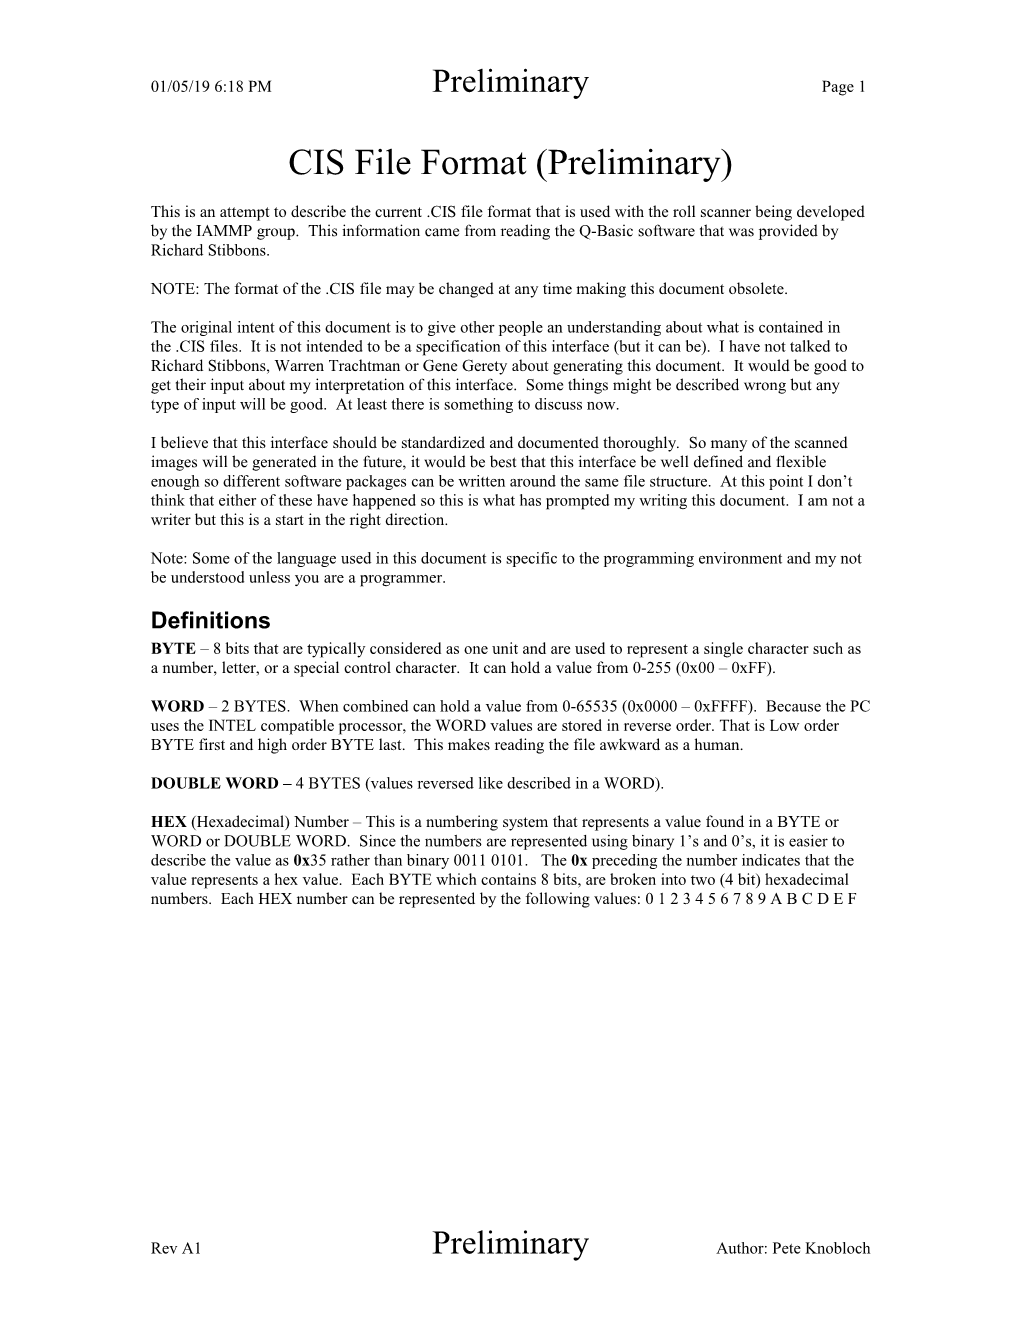 CIS File Format (Preliminary)